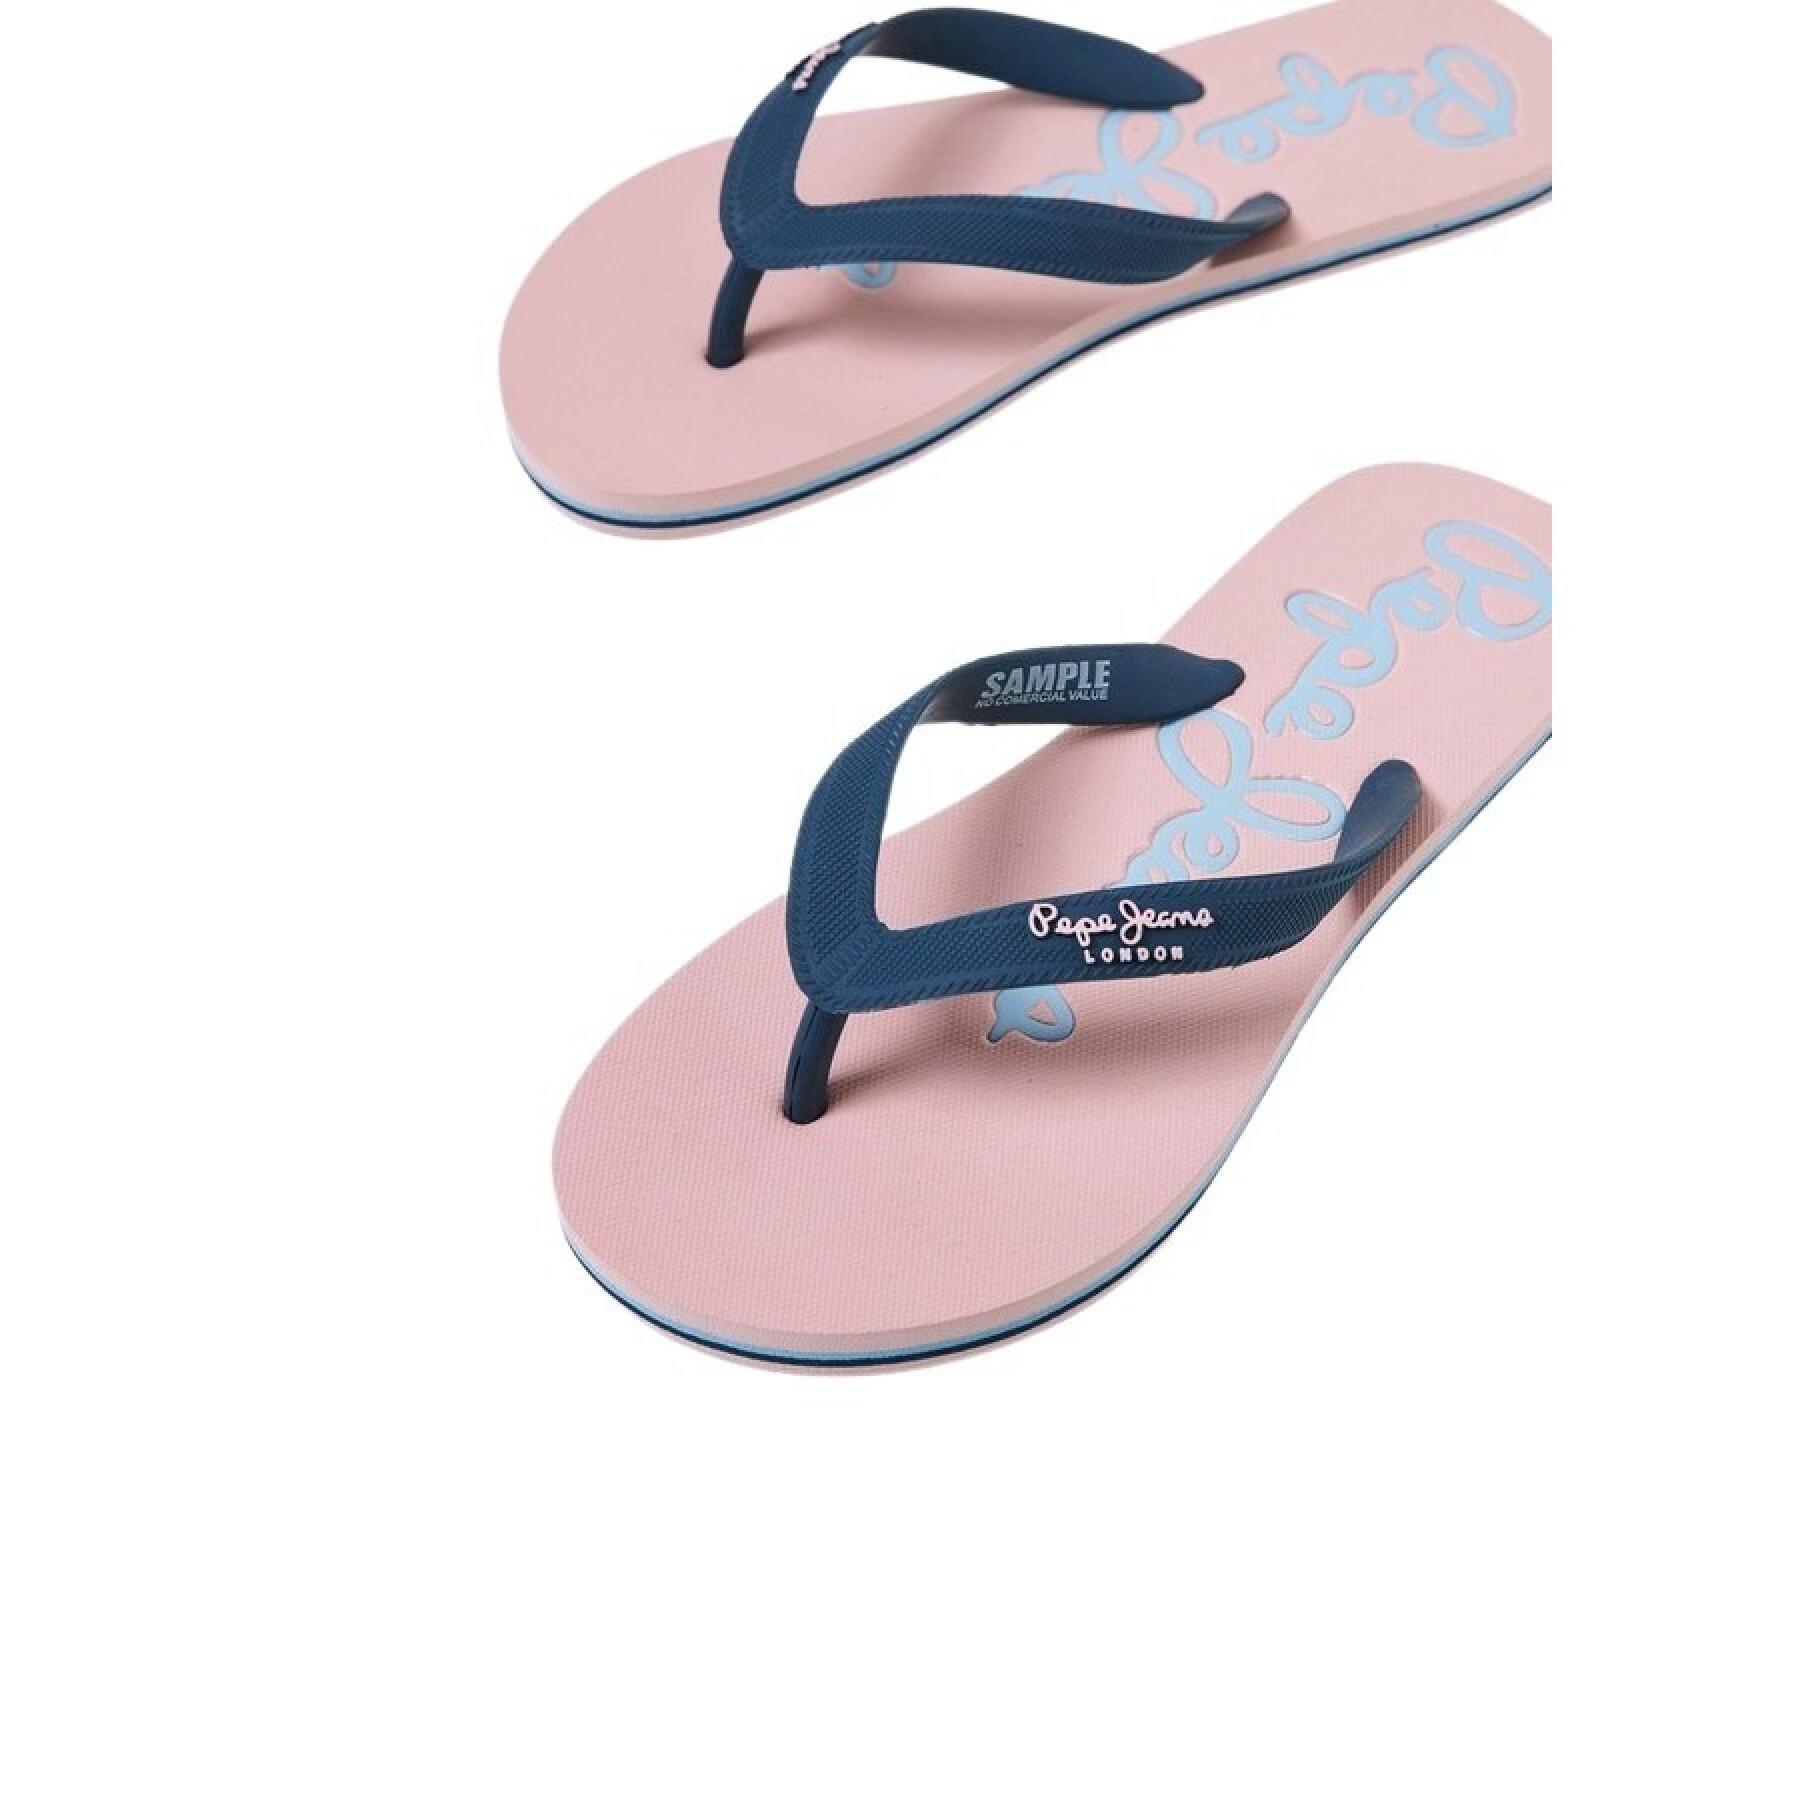 Women's flip-flops Pepe Jeans Bay Beach Brand